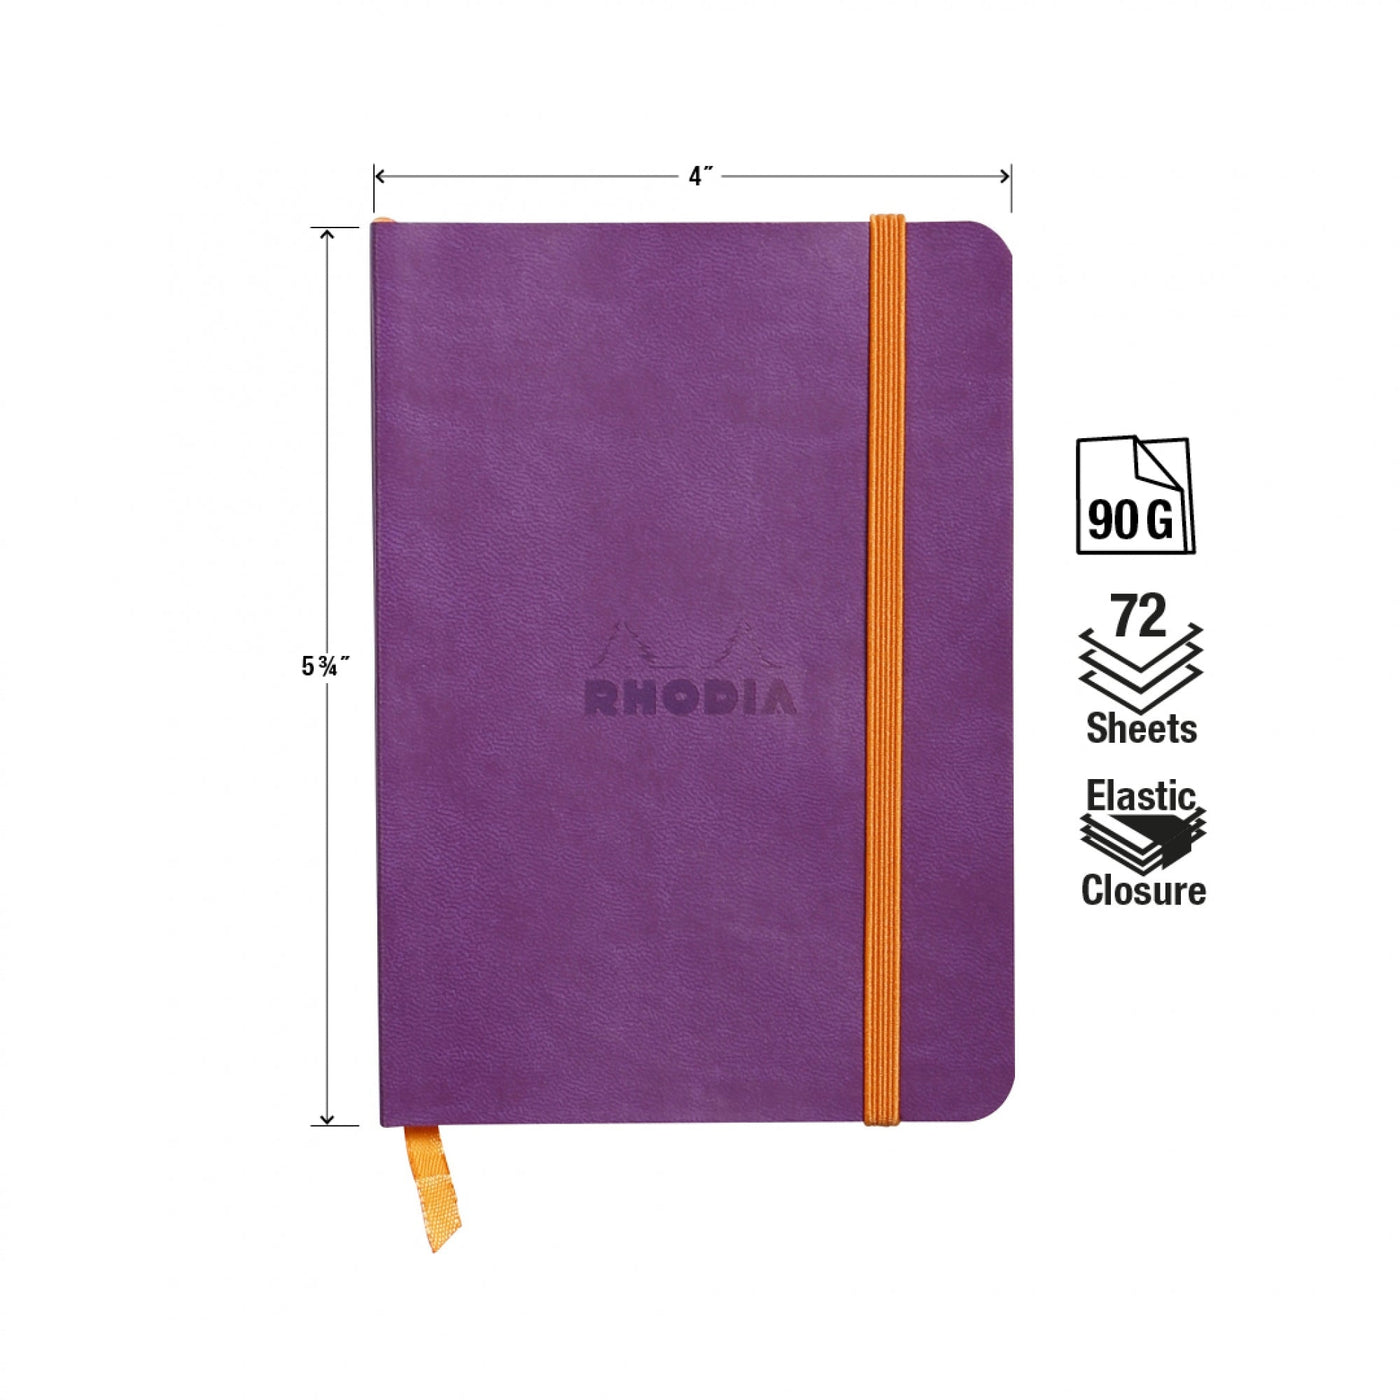 Rhodia Rhodiarama Soft Cover A6 Purple Dotted Notebook Measurements